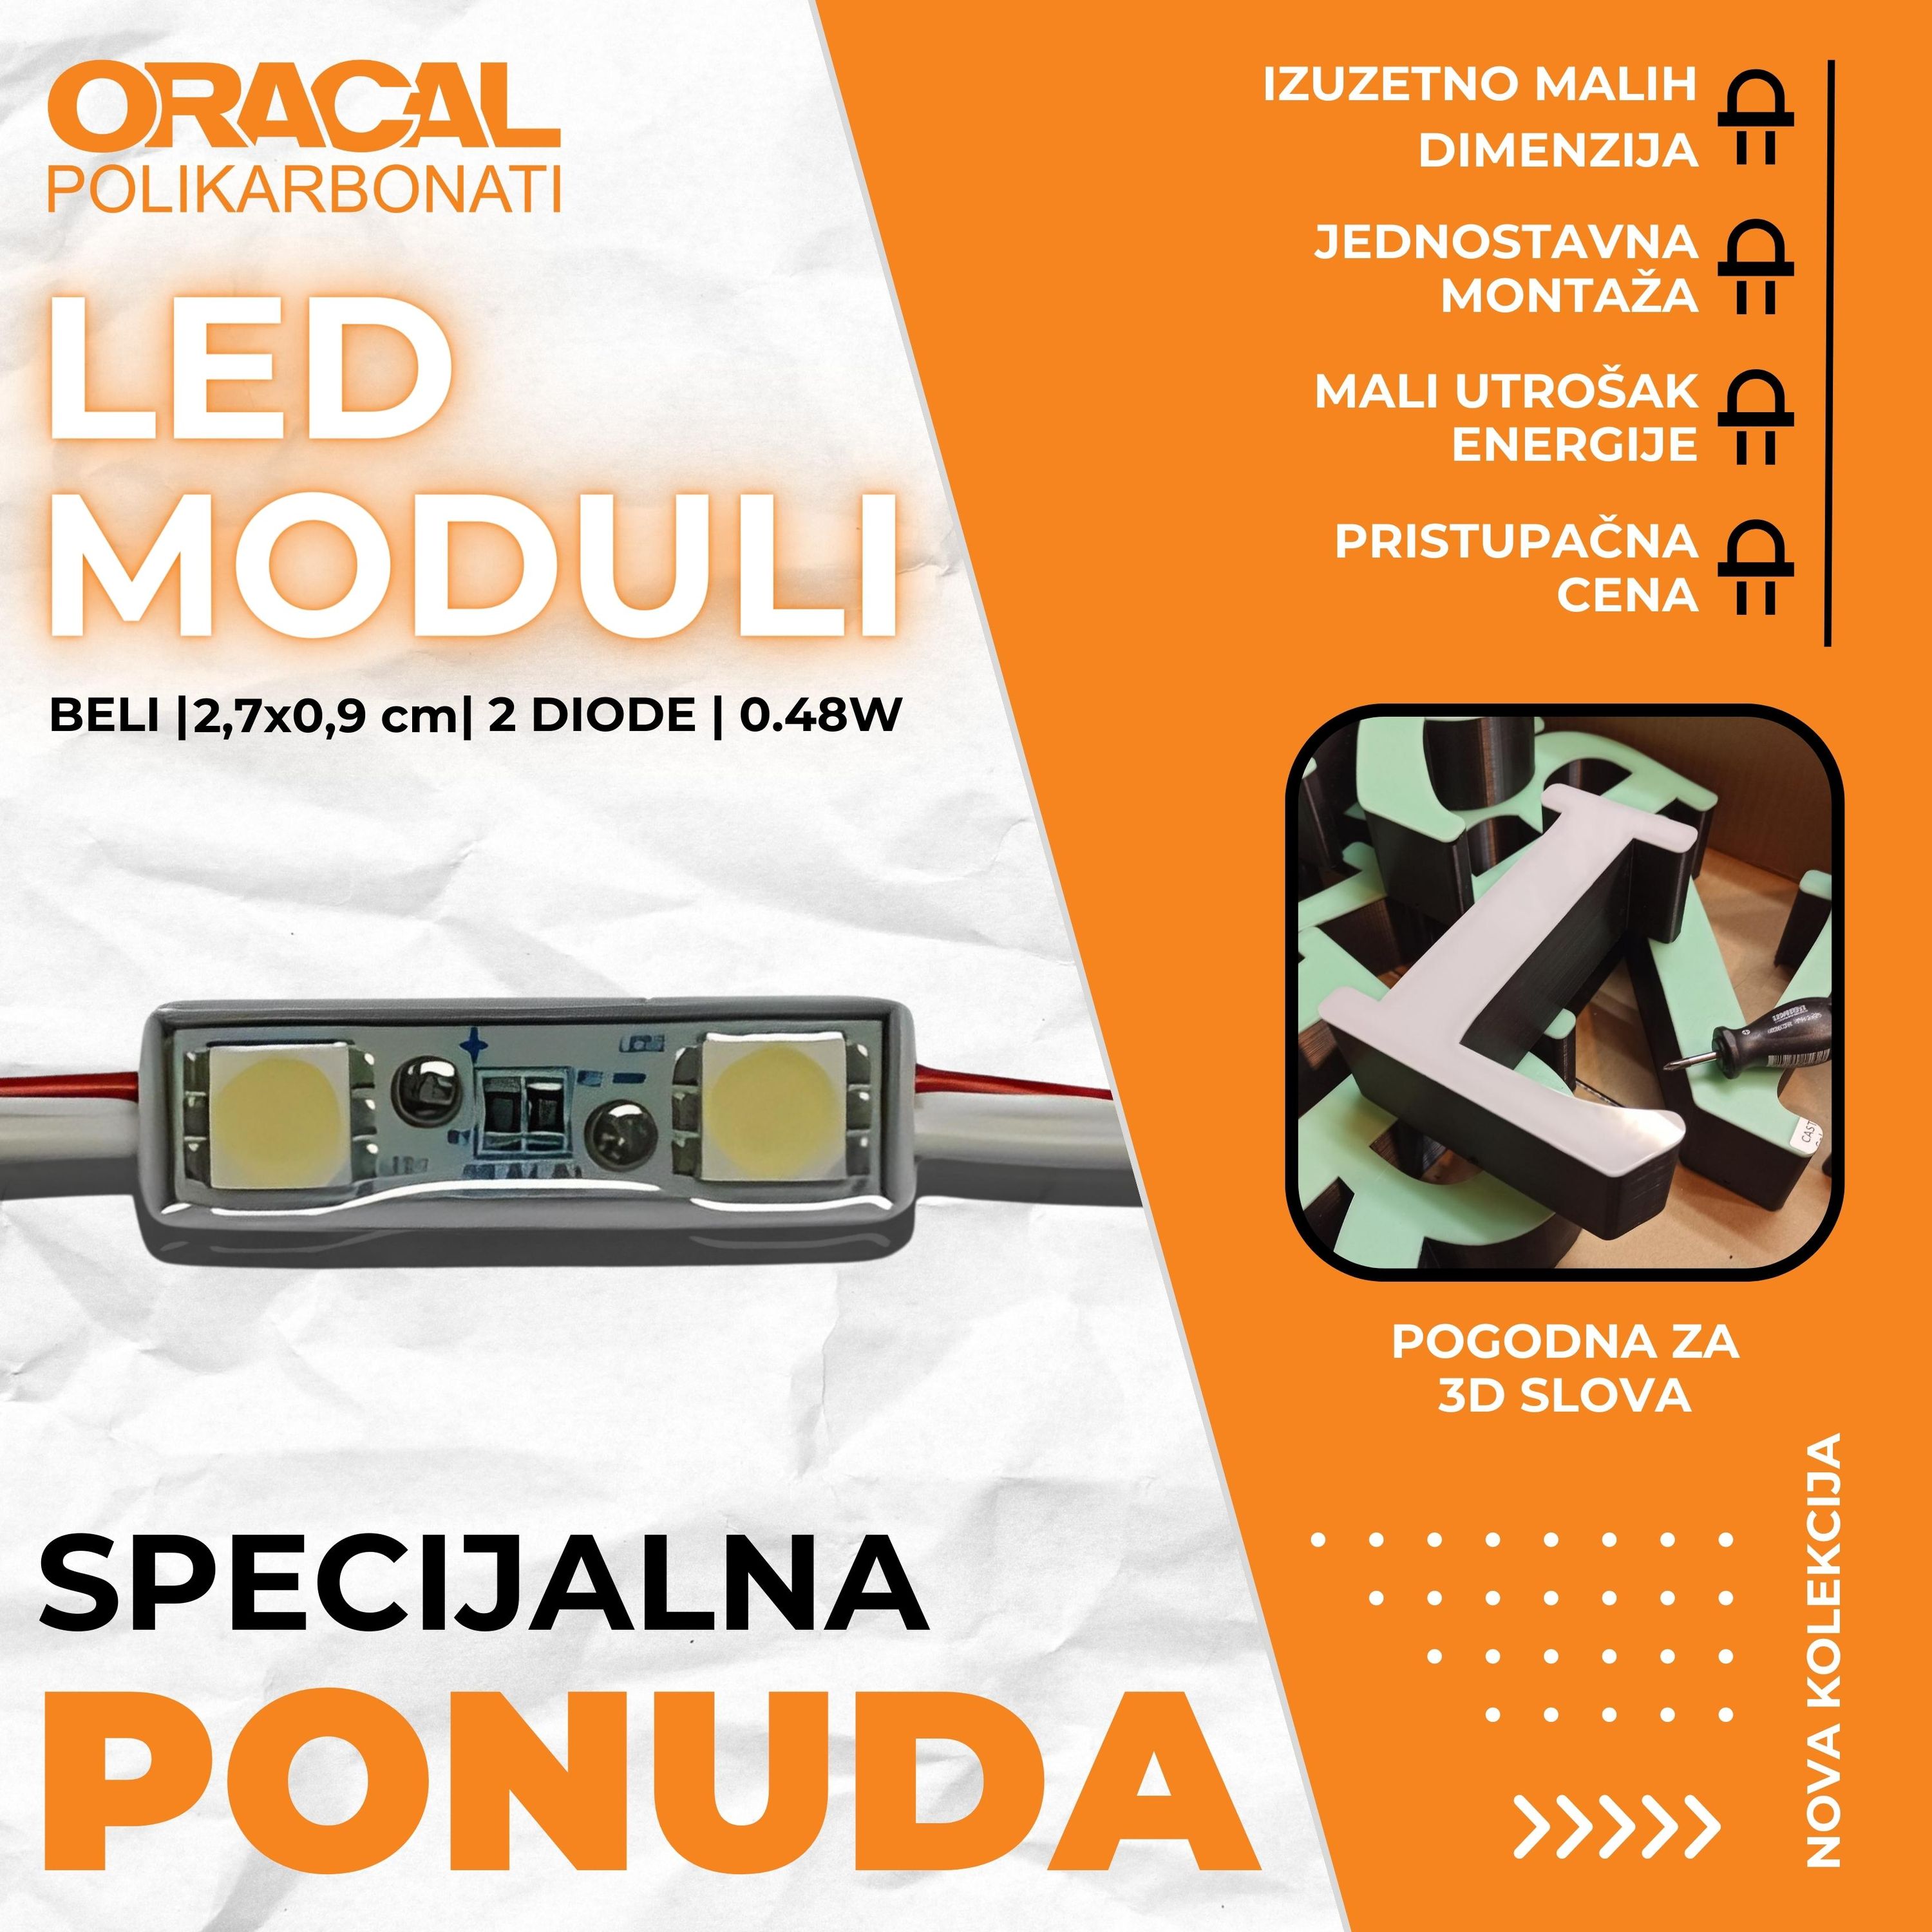 LED modul malih dimenzija 2,7x0,9 cm, 0,48W